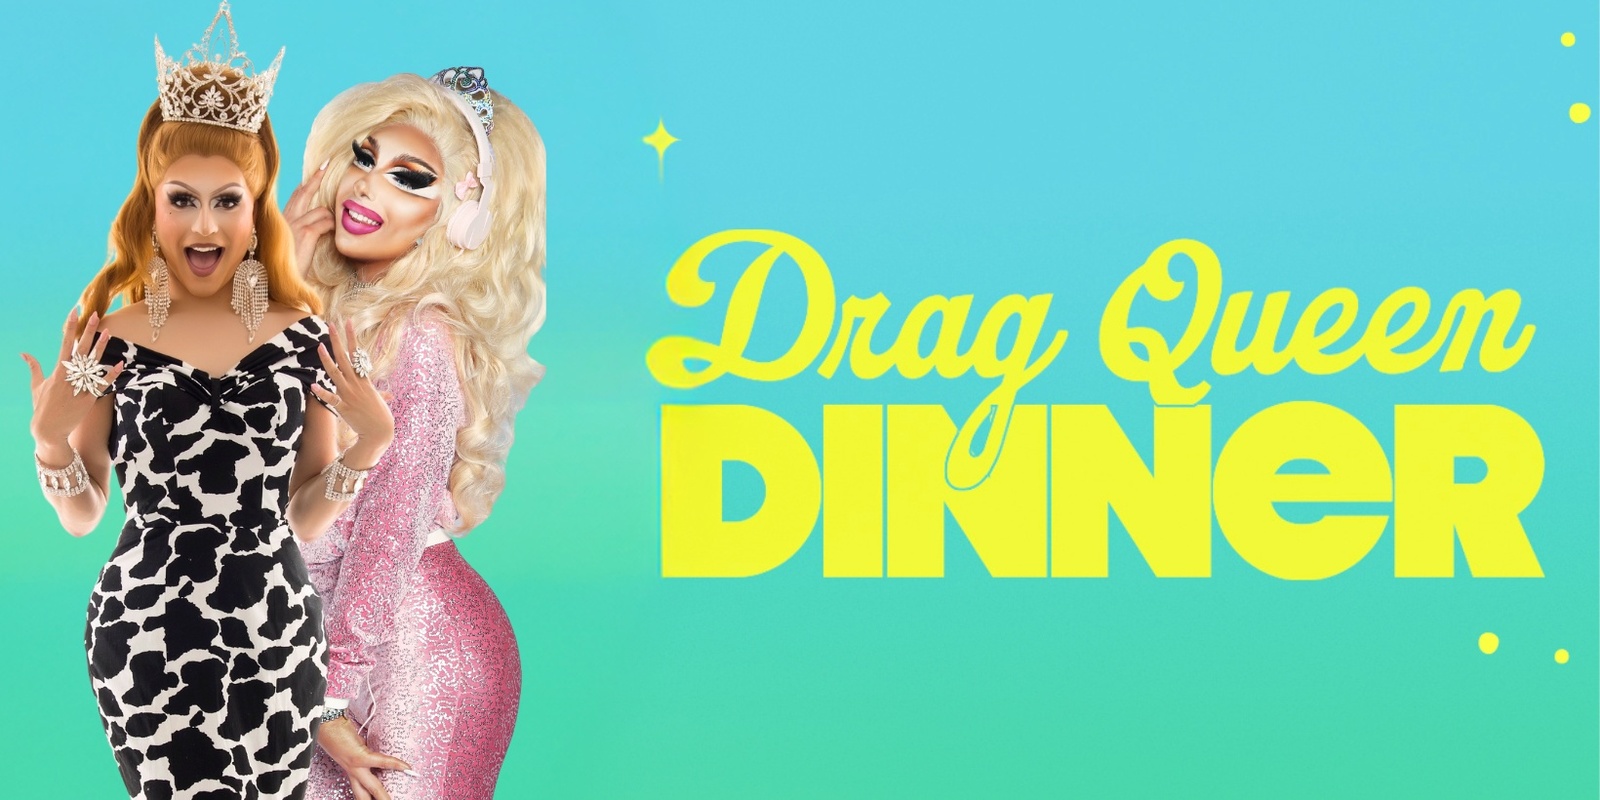 Banner image for Drag Queen Dinner - Hastings